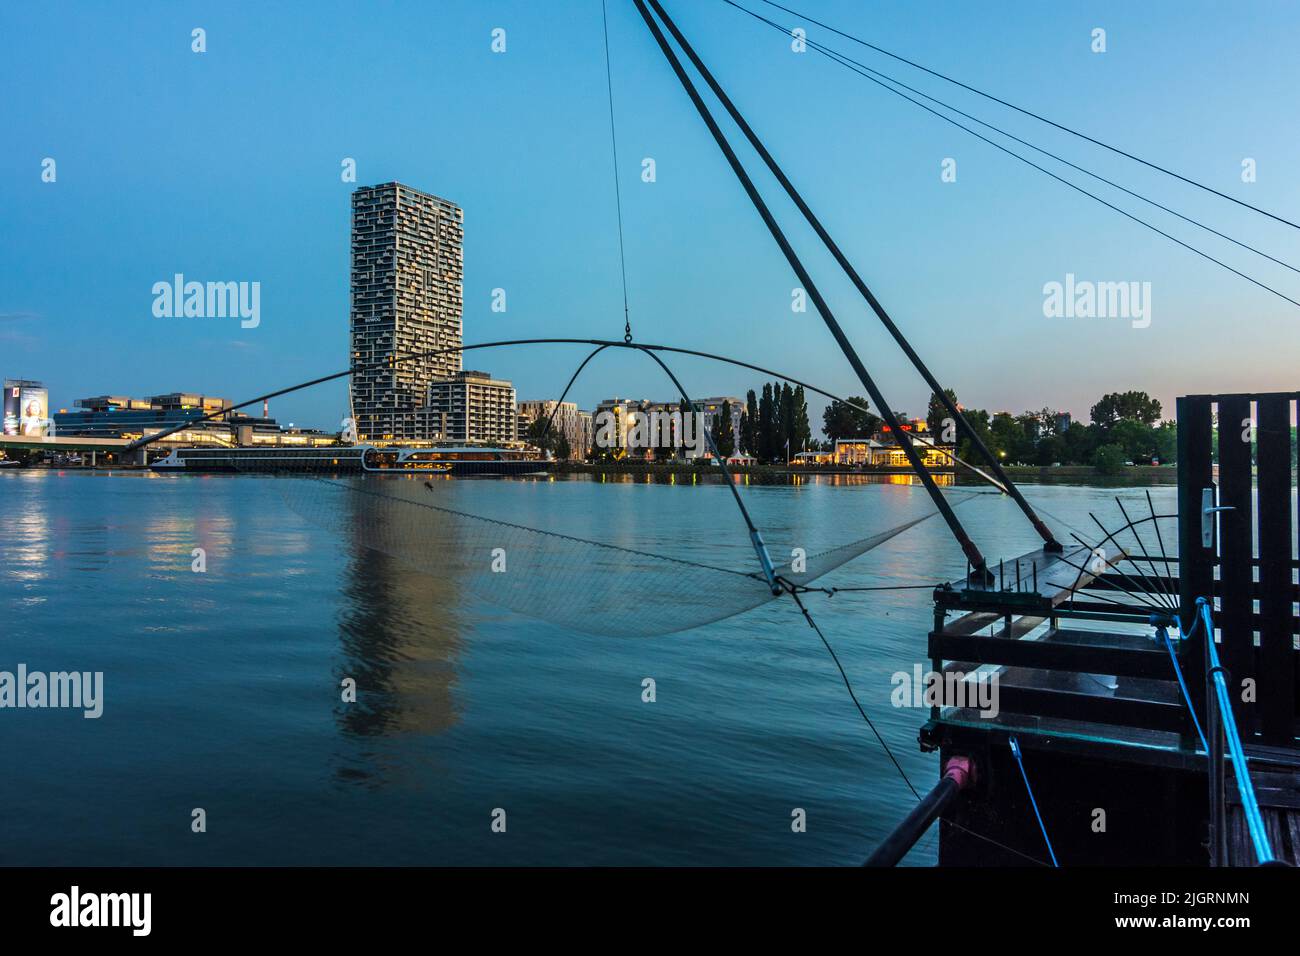 Wien, Vienna: river Donau (Danube), Daubel boat with lifting fishing net, cruise ship, high-rise Marina Tower, subway bridge Donaustadtbrücke in 02. L Stock Photo